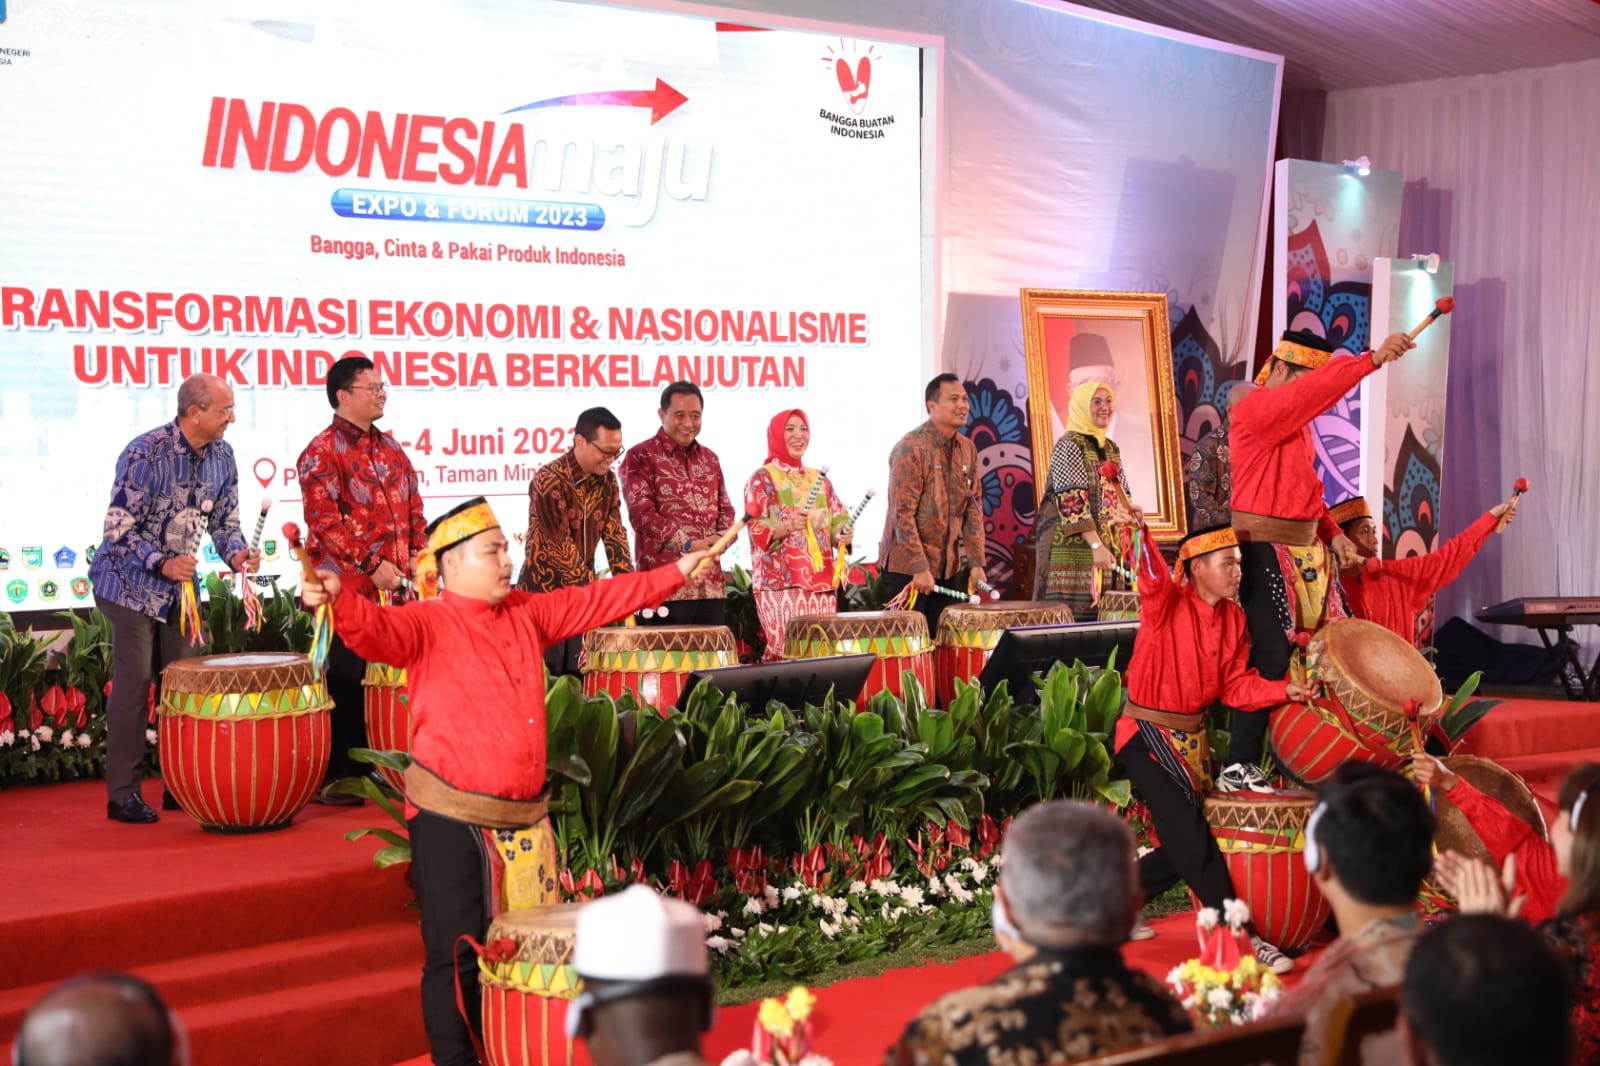 Wagub Chusnunia Hadiri Opening Ceremony Indonesia Maju Expo & Forum 2023 di Taman Mini Indonesia Indah Jakarta